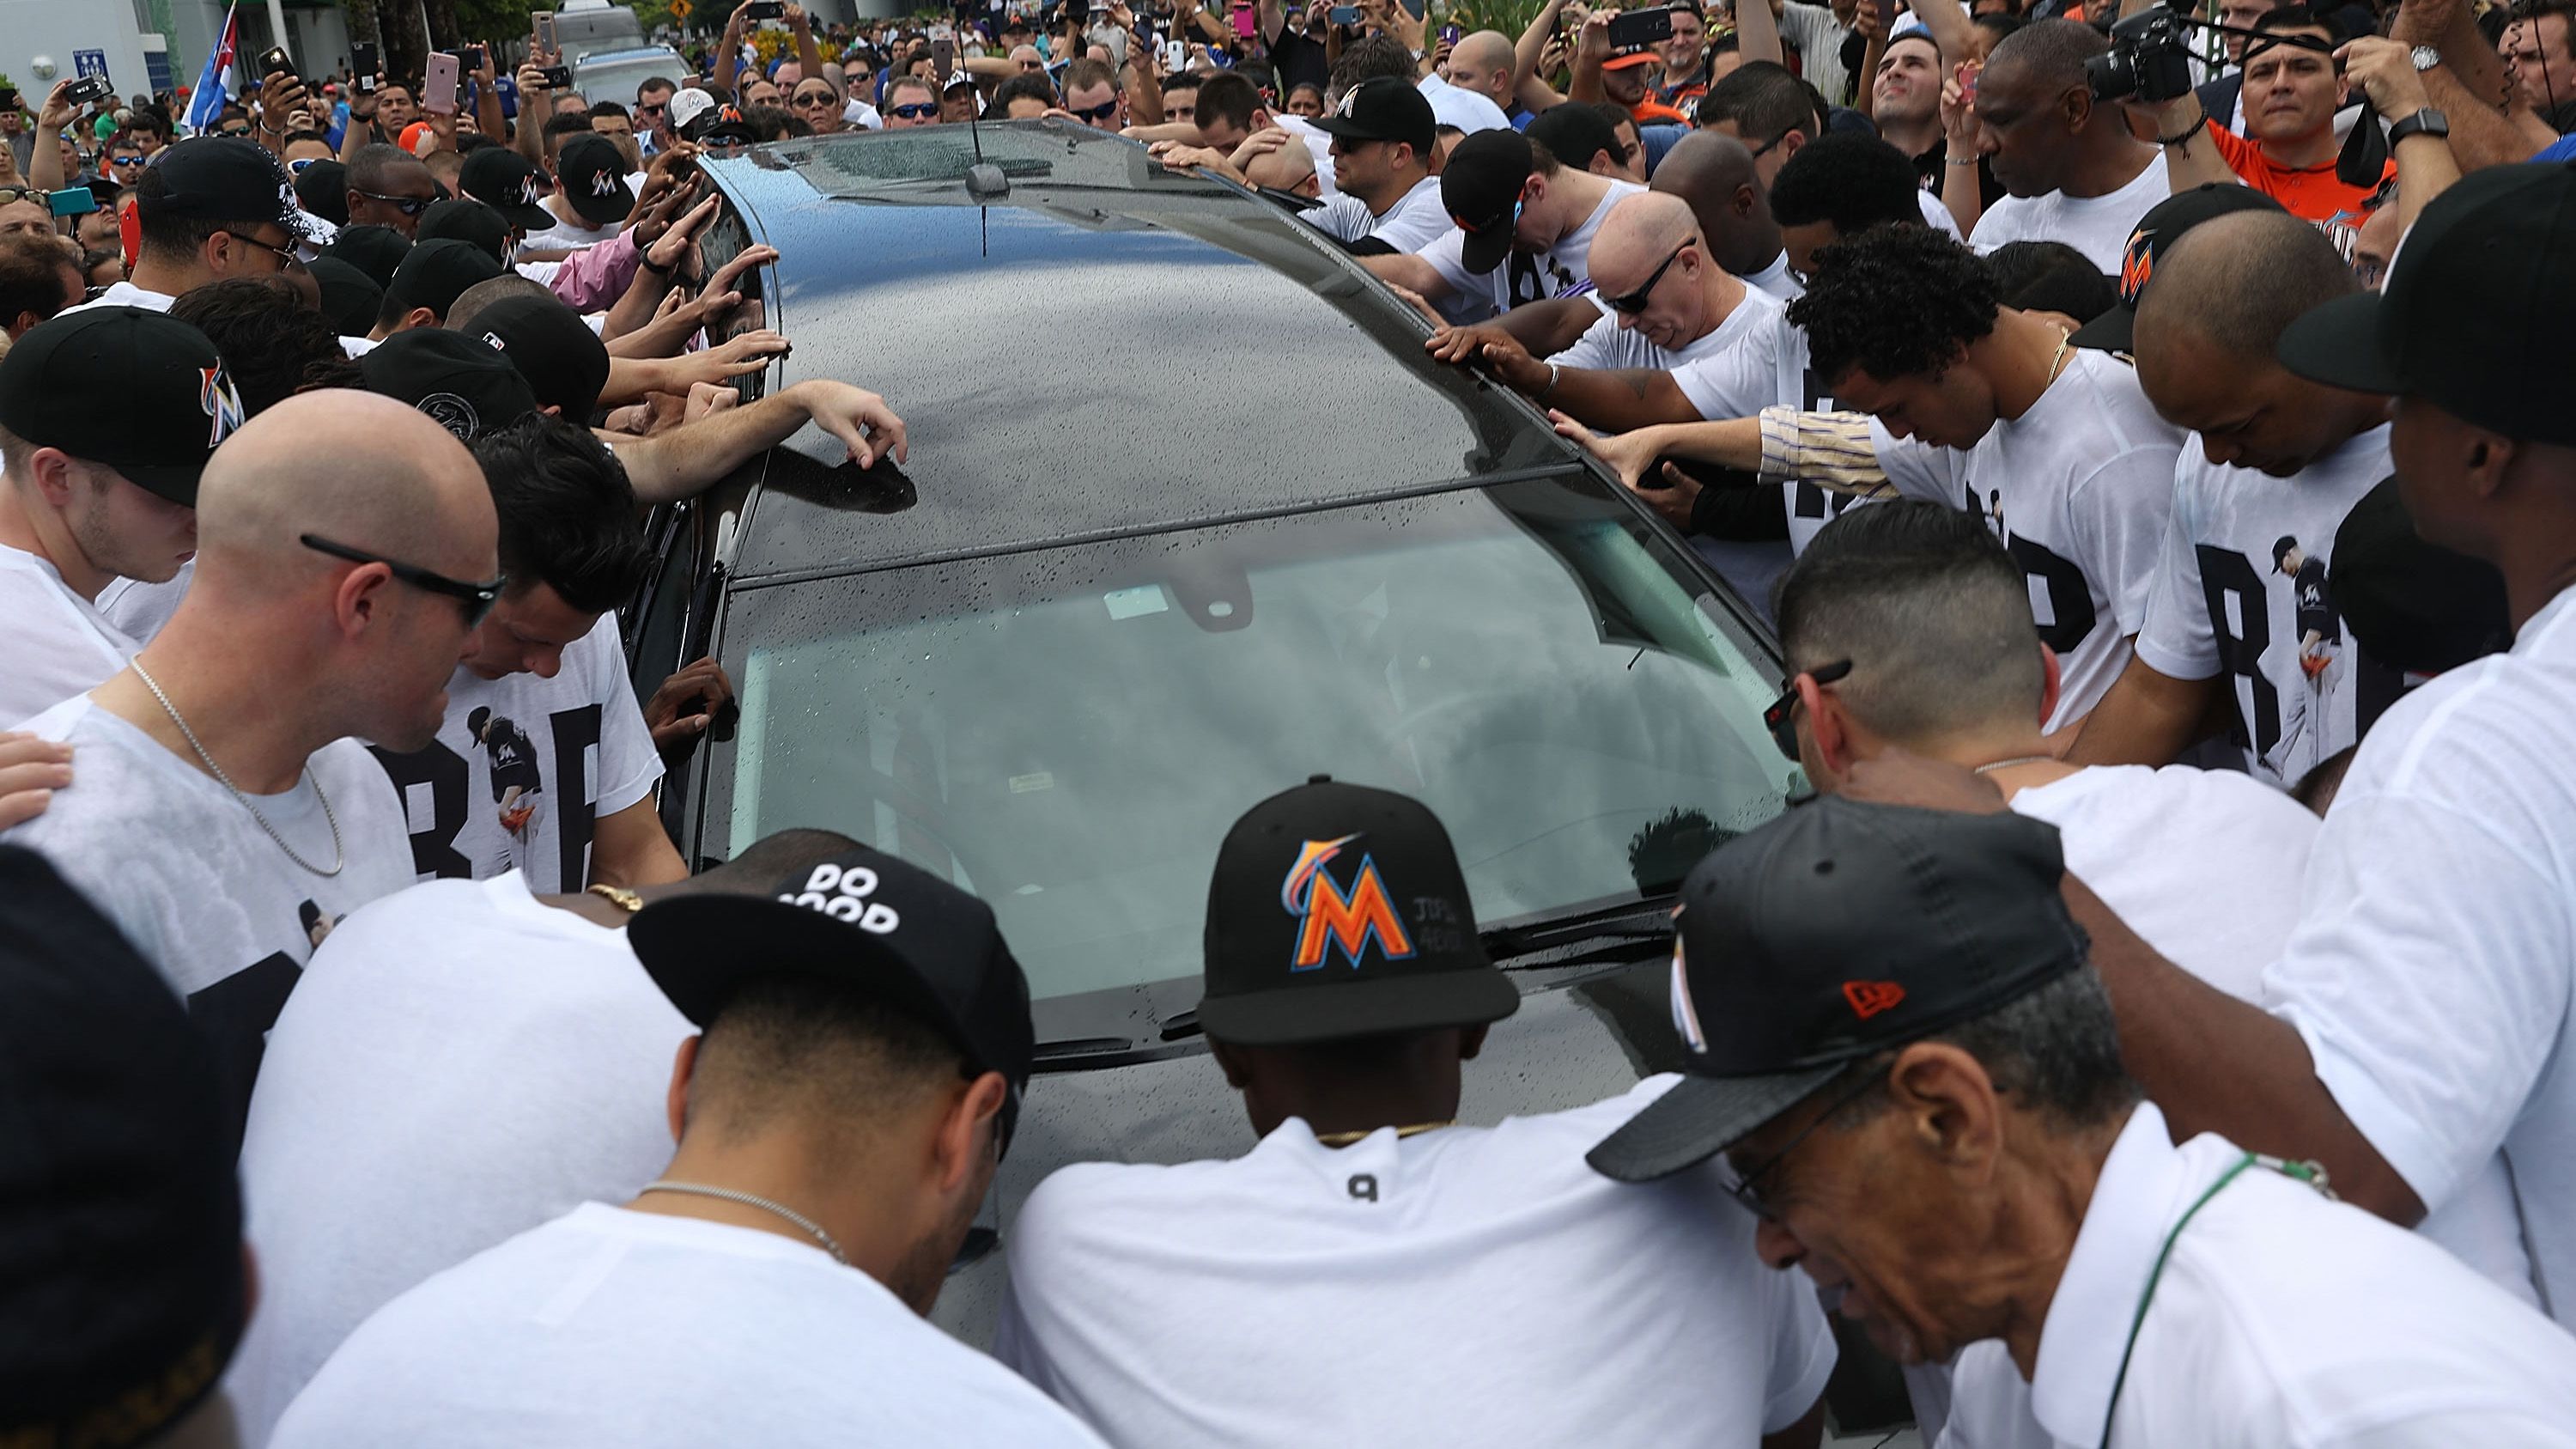 Miami baseball star Fernandez responsible for deadly boat crash: report